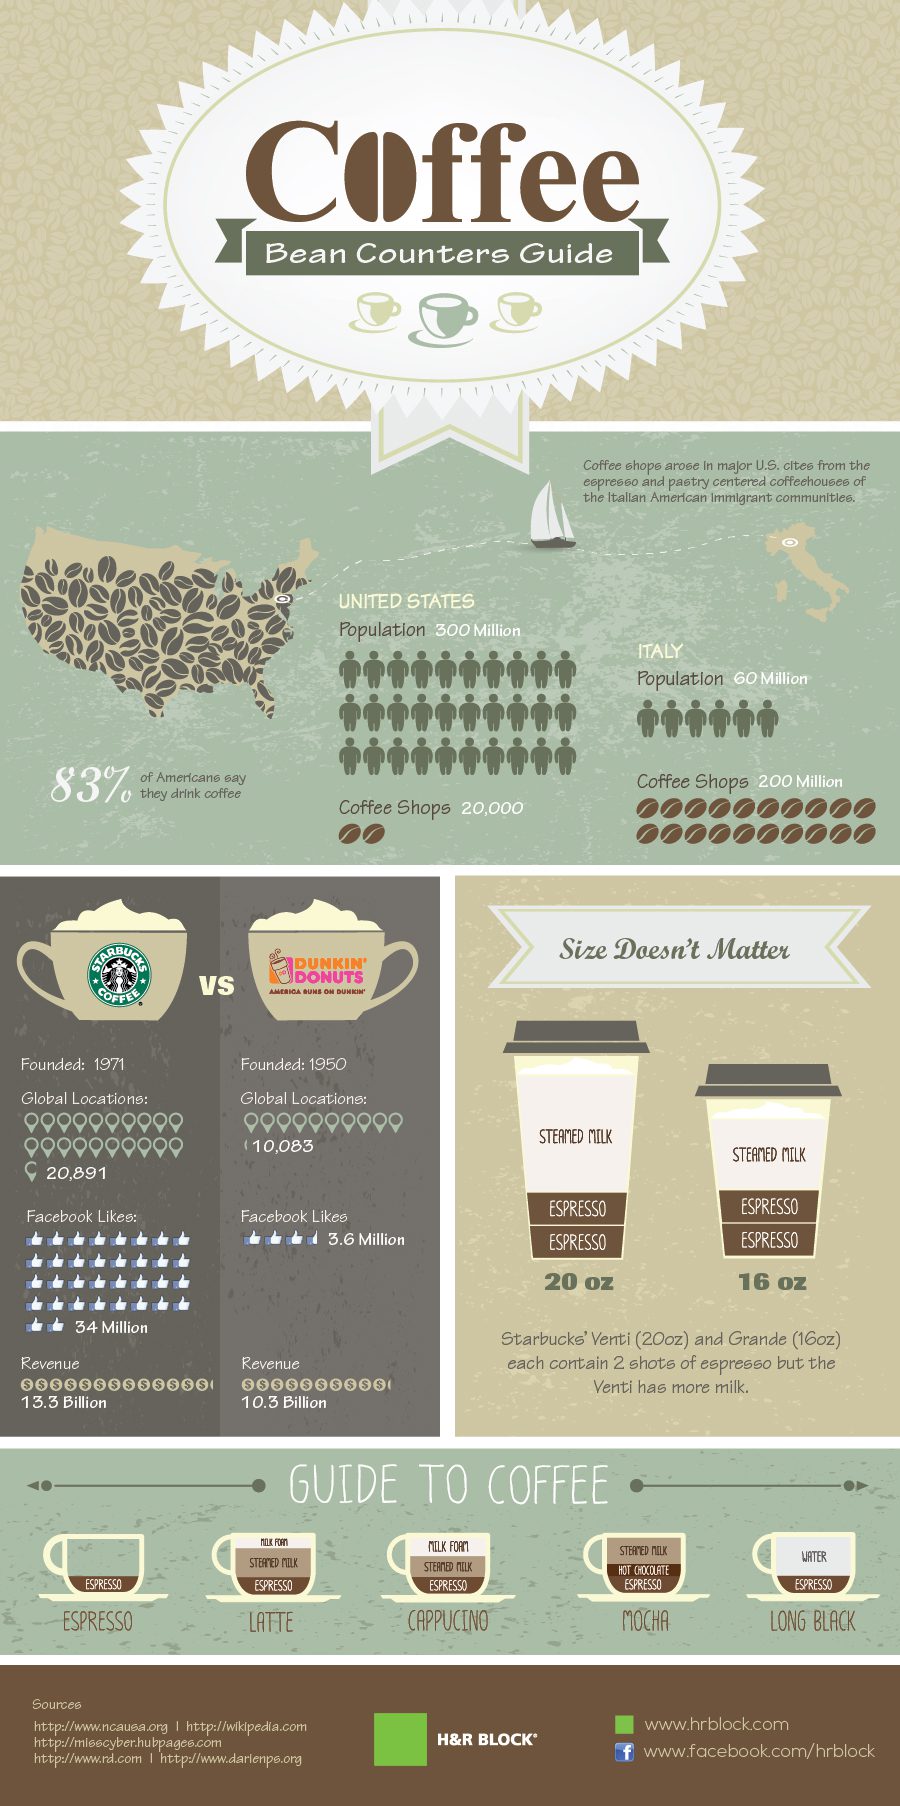 Who Invented the Coffee Percolator